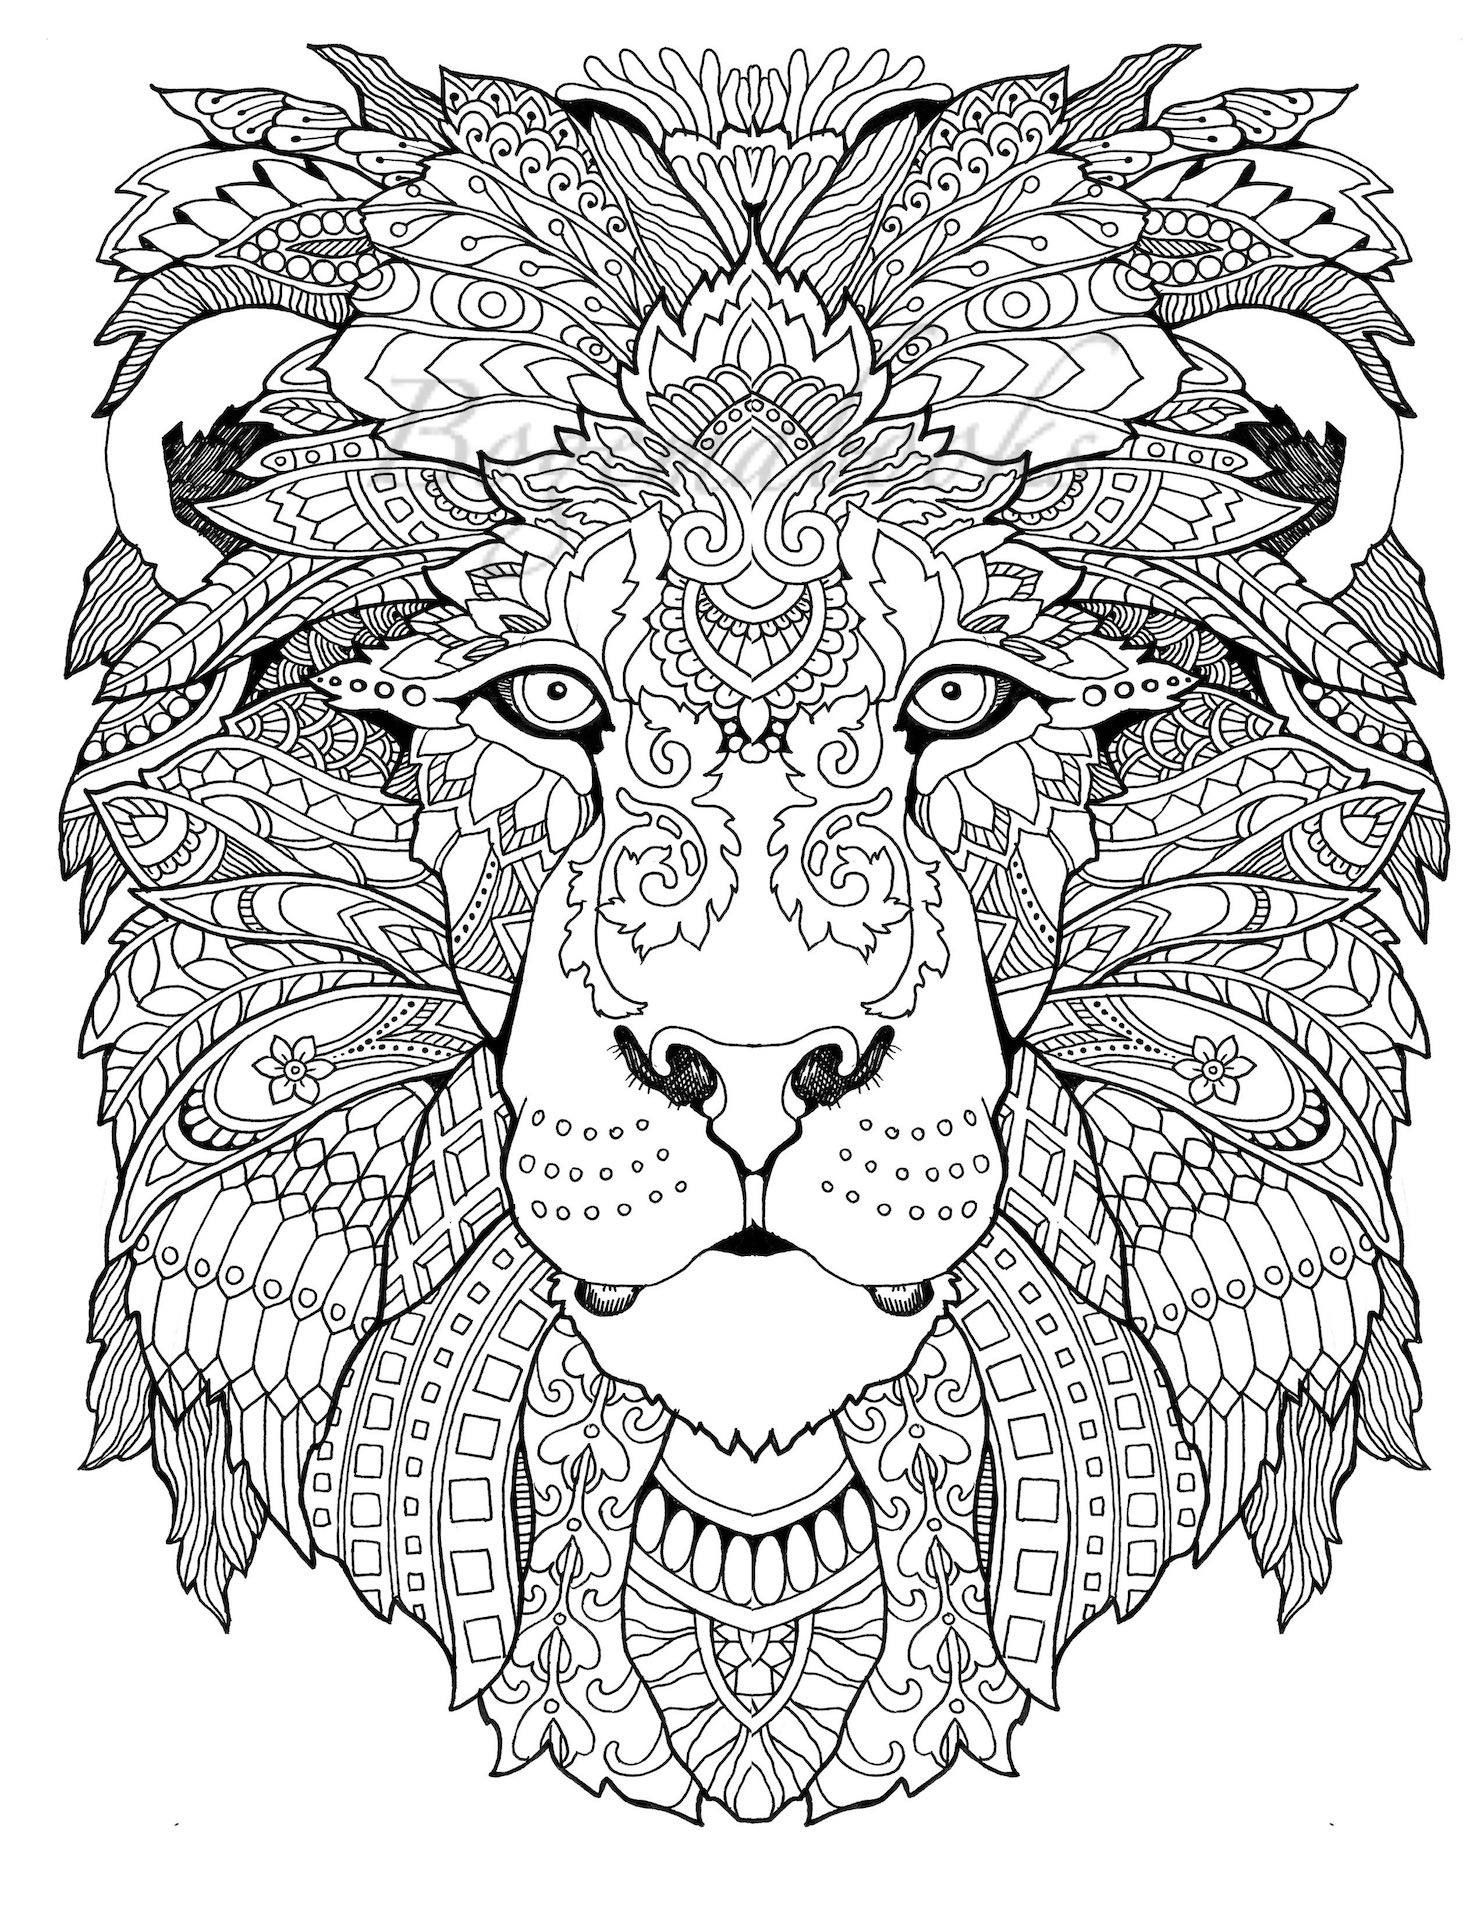 Coloring Sheet Lion